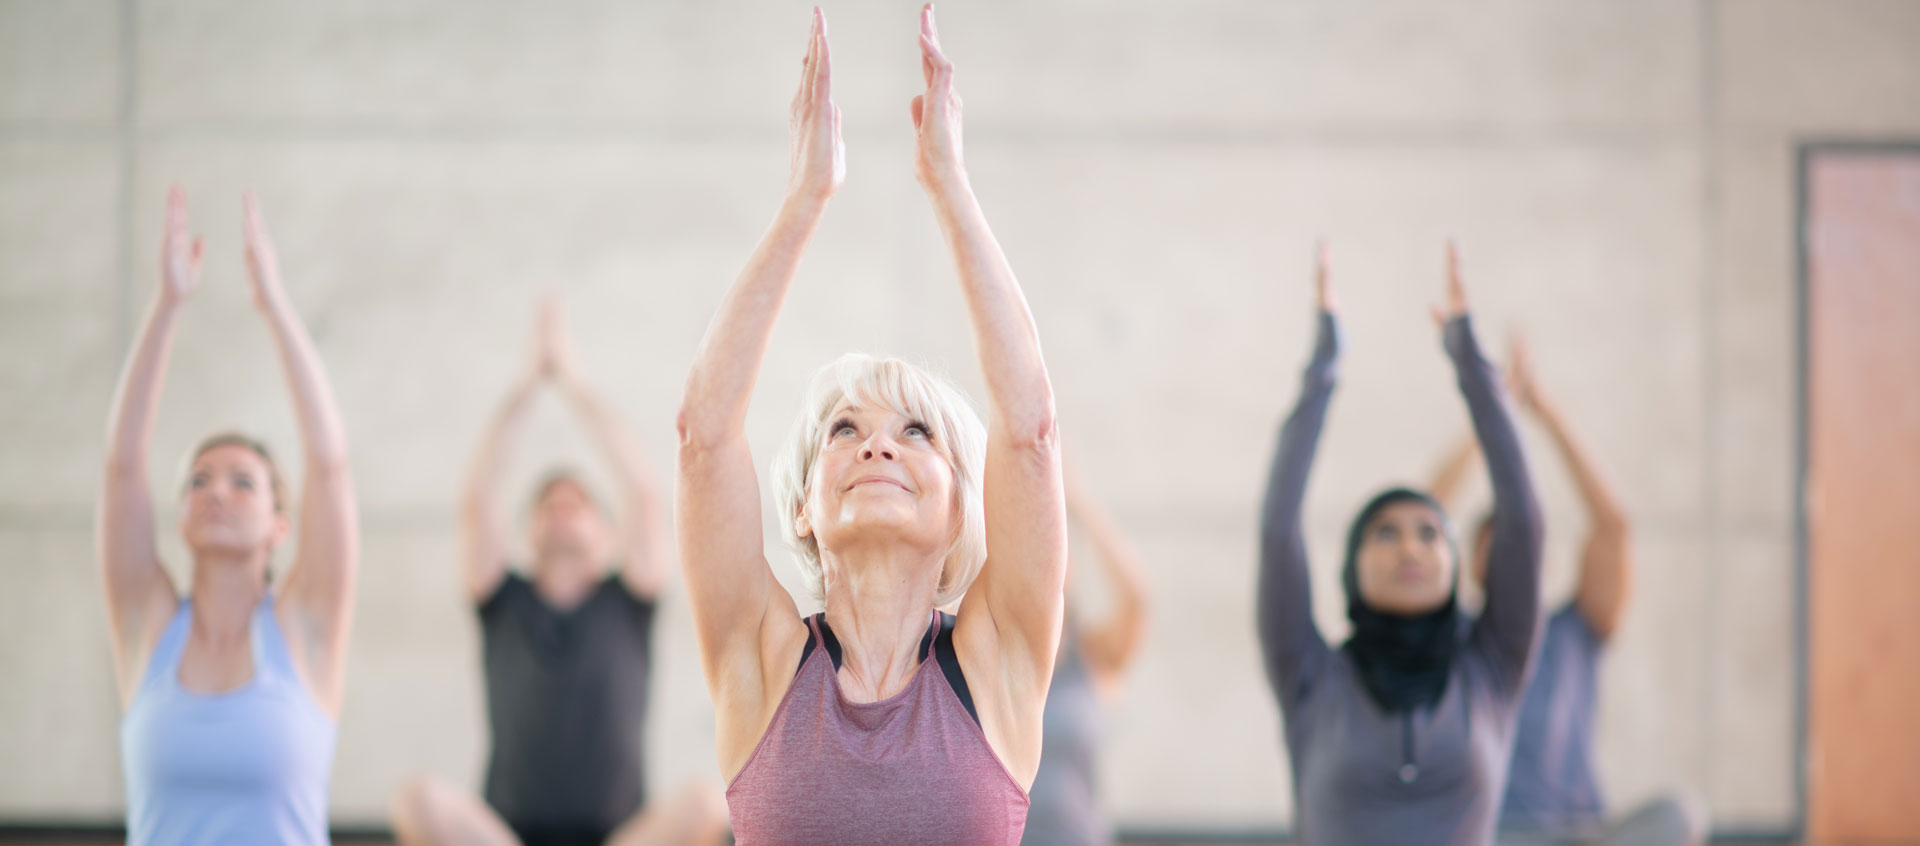 Yoga Helps Heal Bone Fractures • Yoga Basics